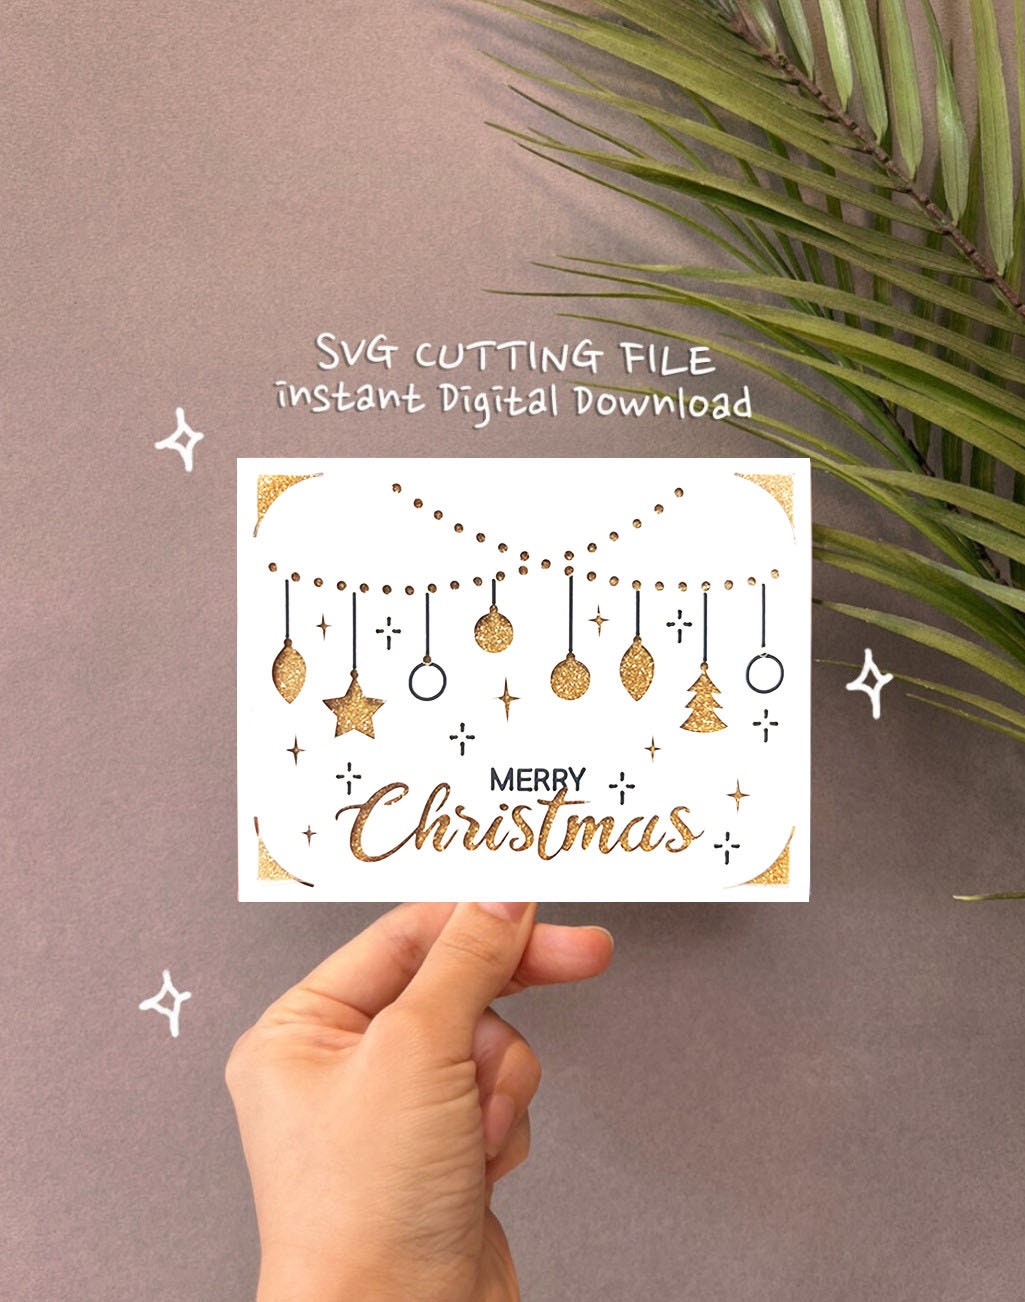 Cricut Foil Christmas Card, Single Line Design, Sketch Embossing Foil Svg,  Christmas Card Svg Cricut, Foil Transfer File, Cut and Foil 